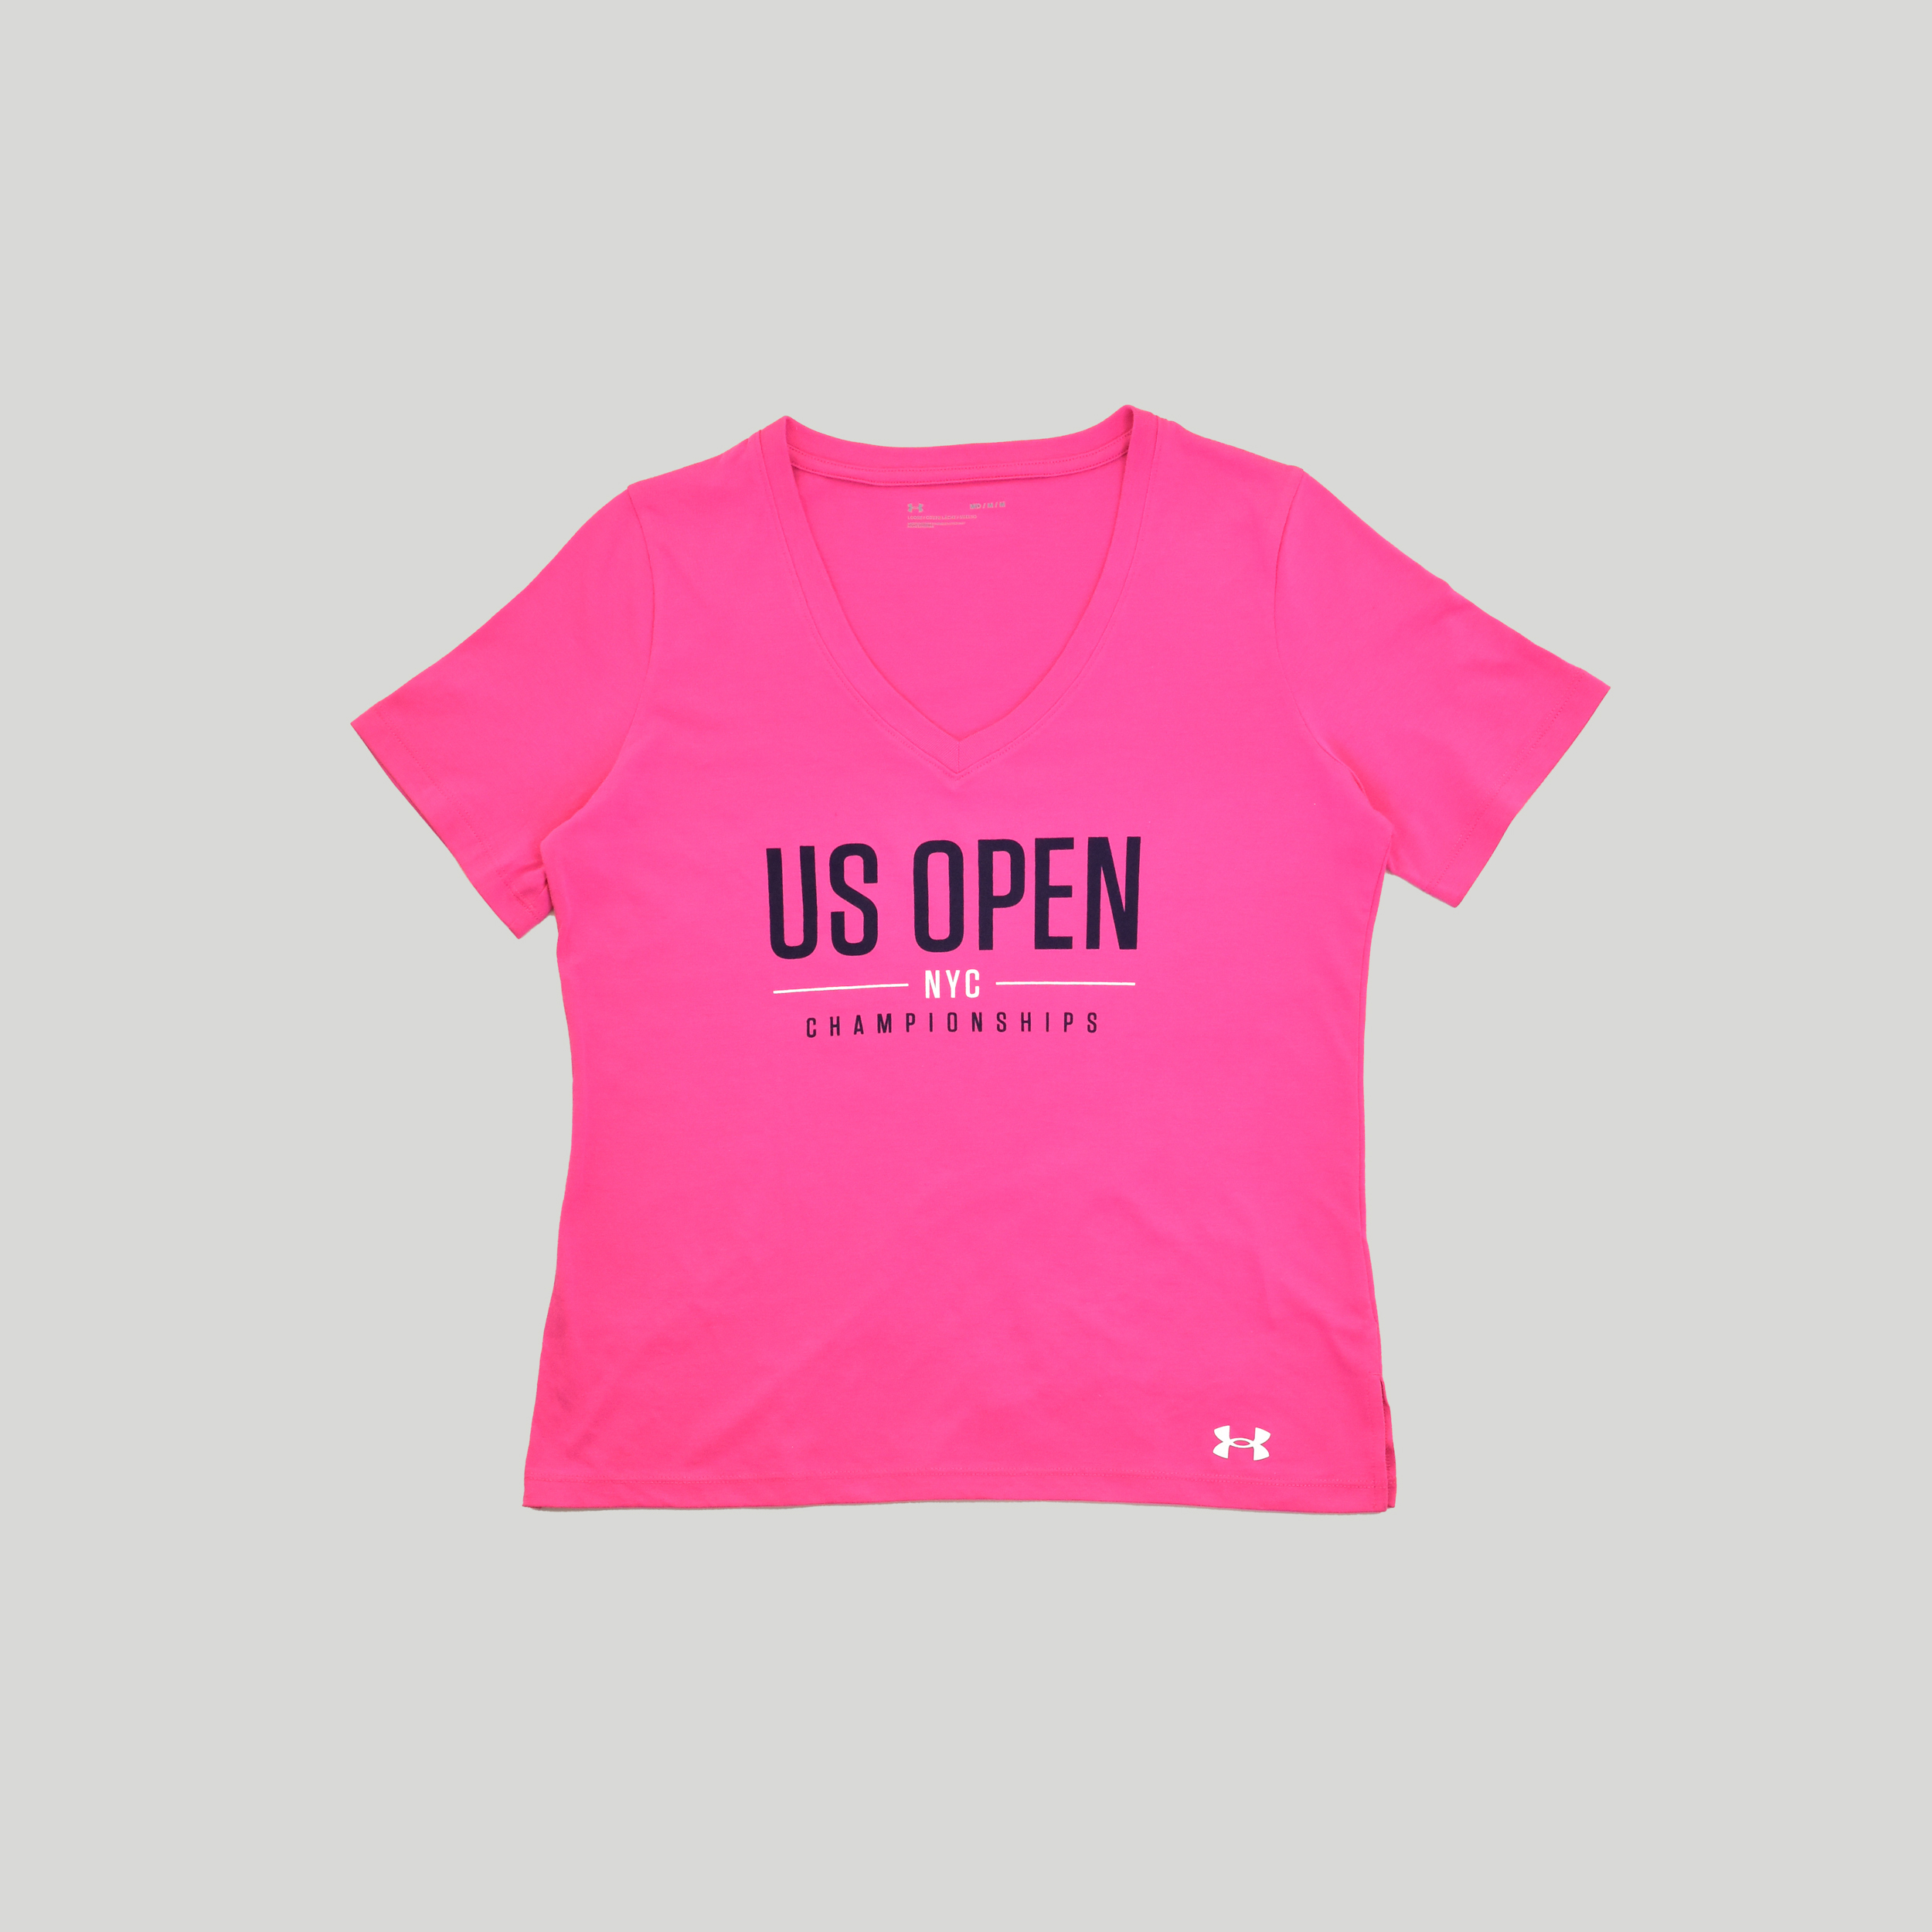 US Open Under Armour Women's Performance Cotton V-neck T-Shirt - Pink - US  Open Shop